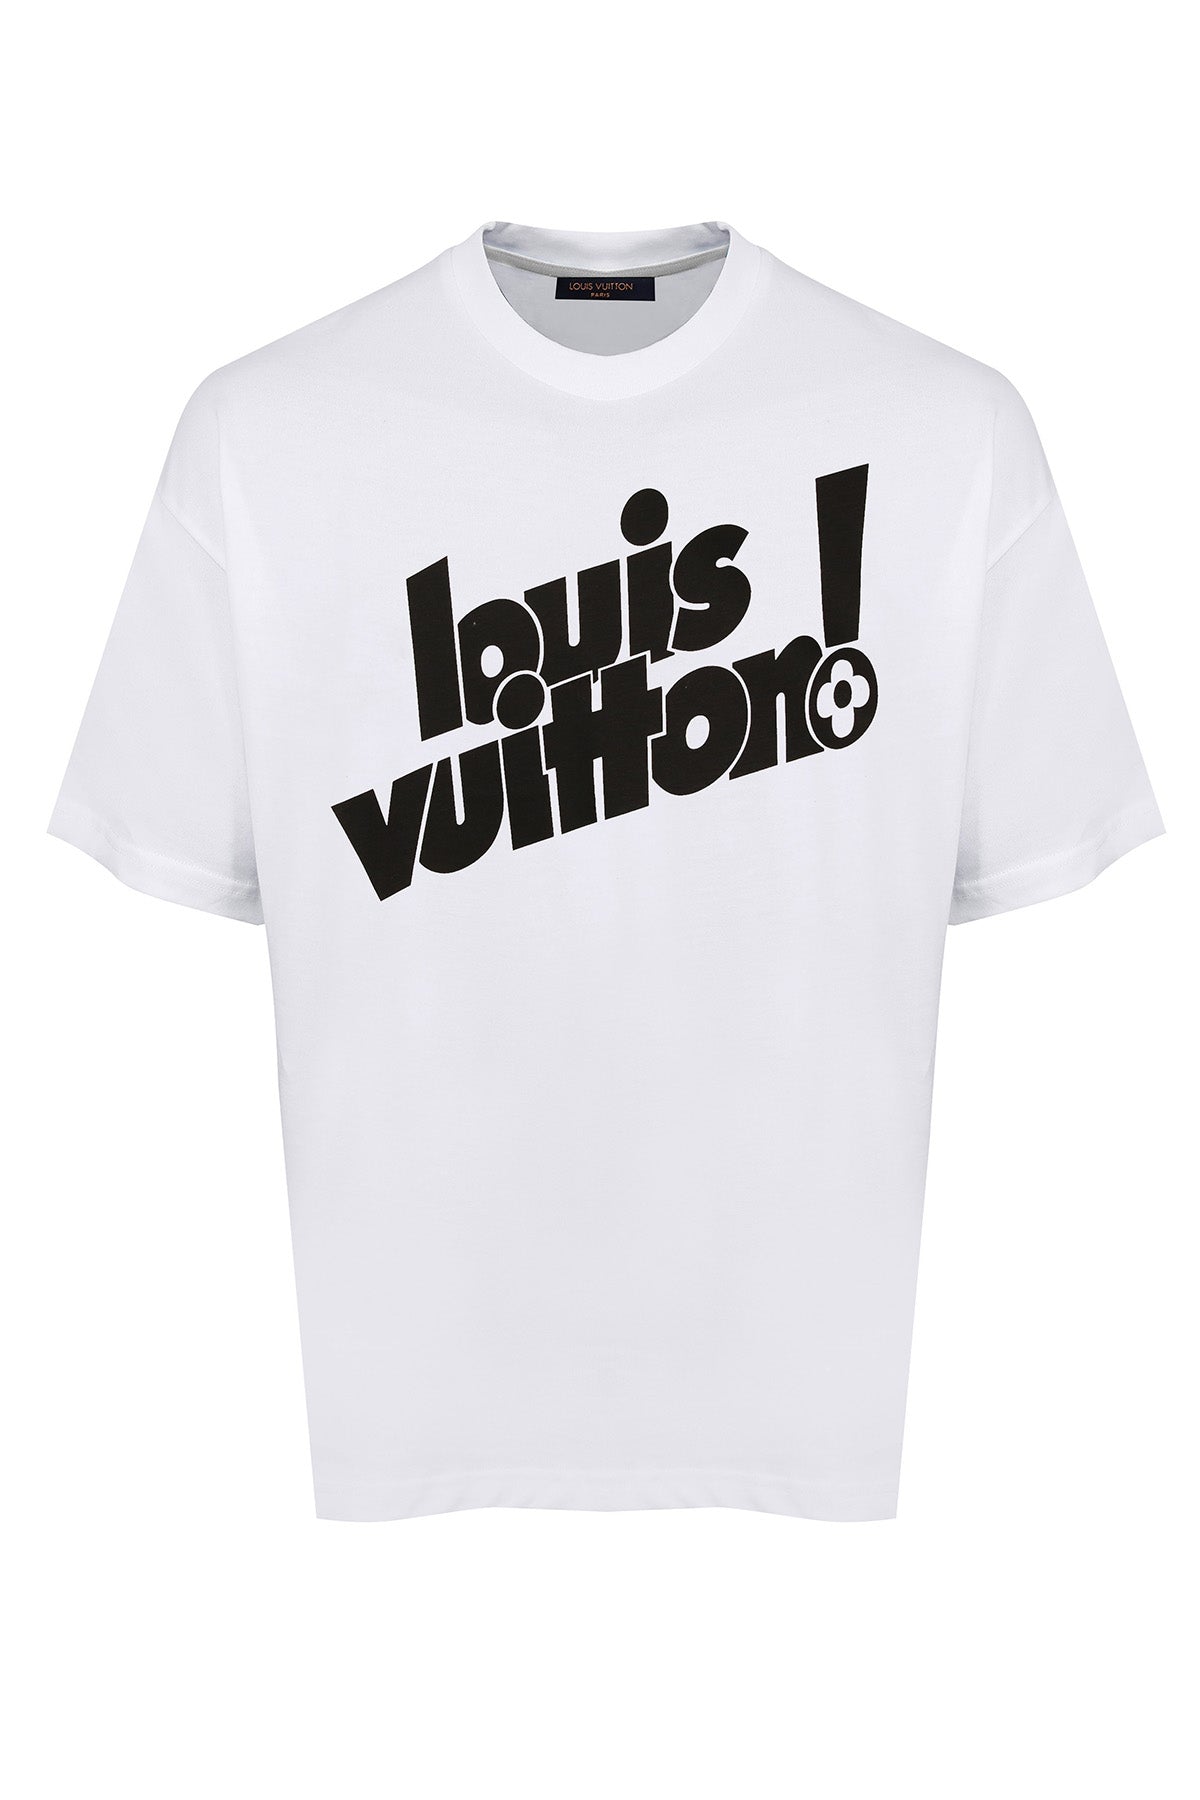 Louis Vuitton Luxury Logo 3D TShirt Limited Edition